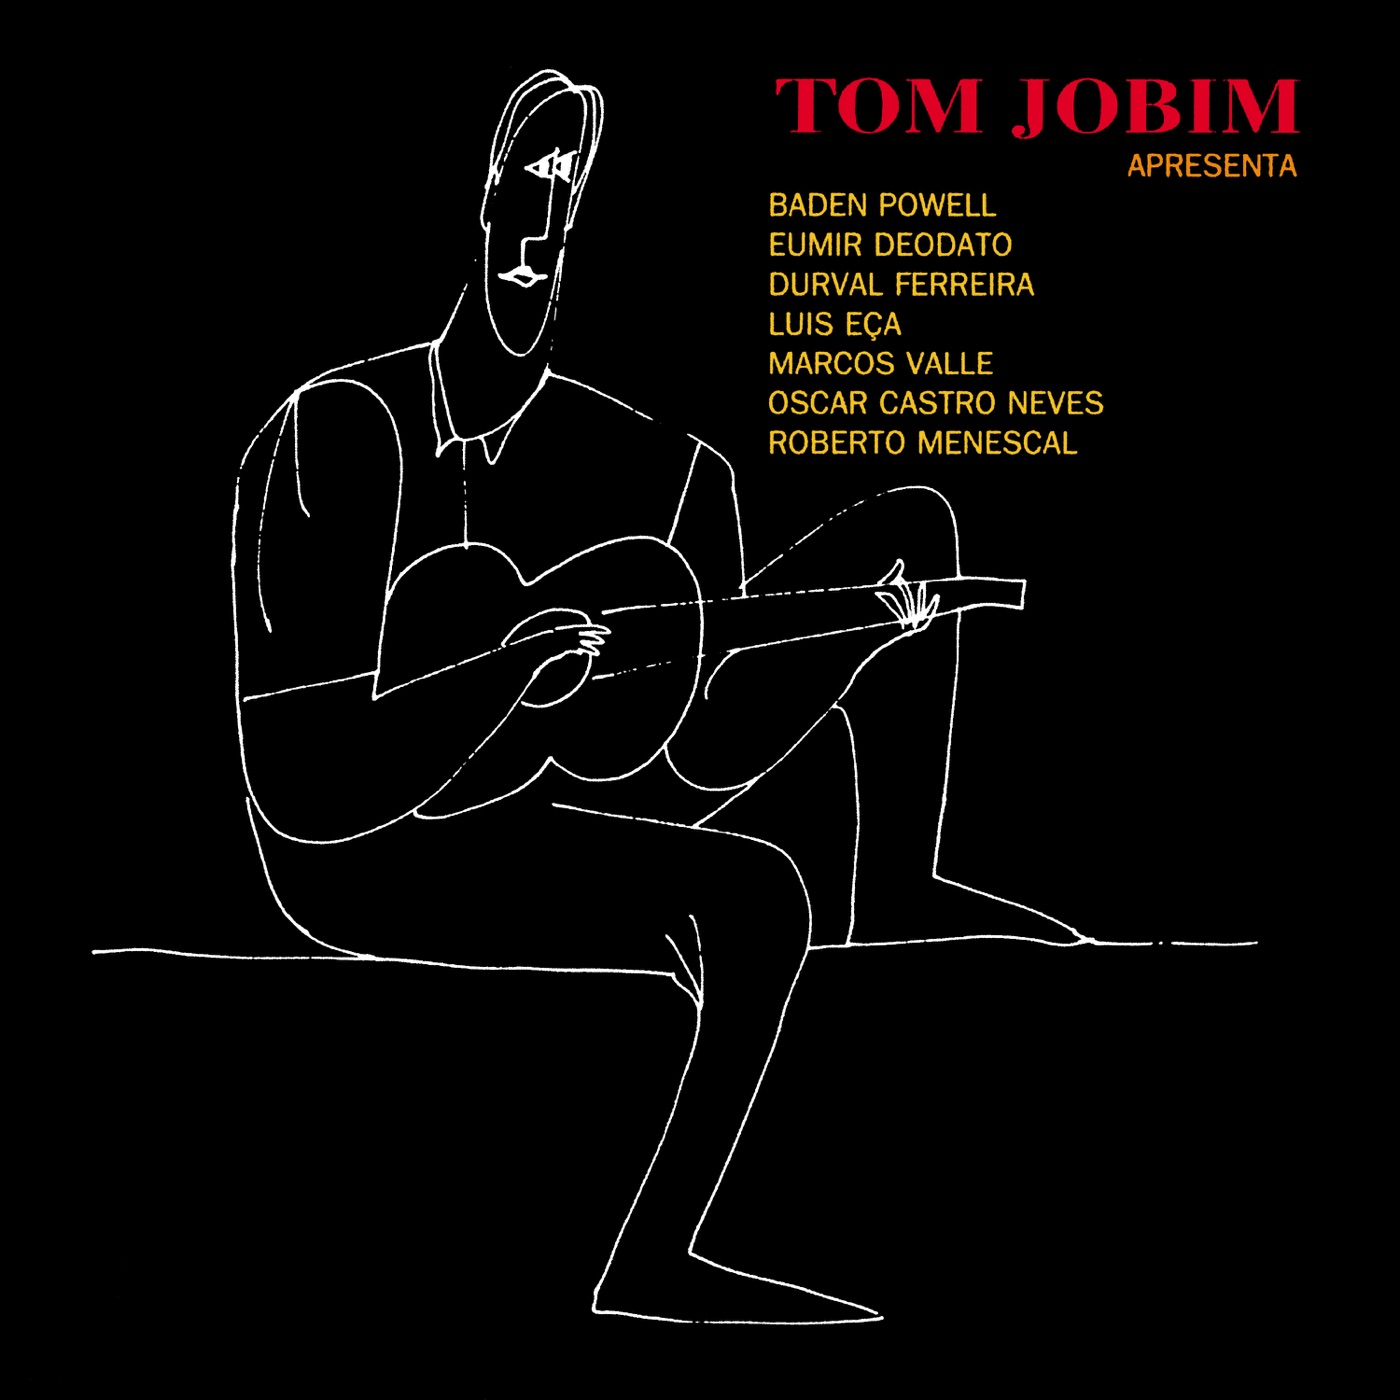 Tom Jobim Apresenta by Antônio Carlos Jobim